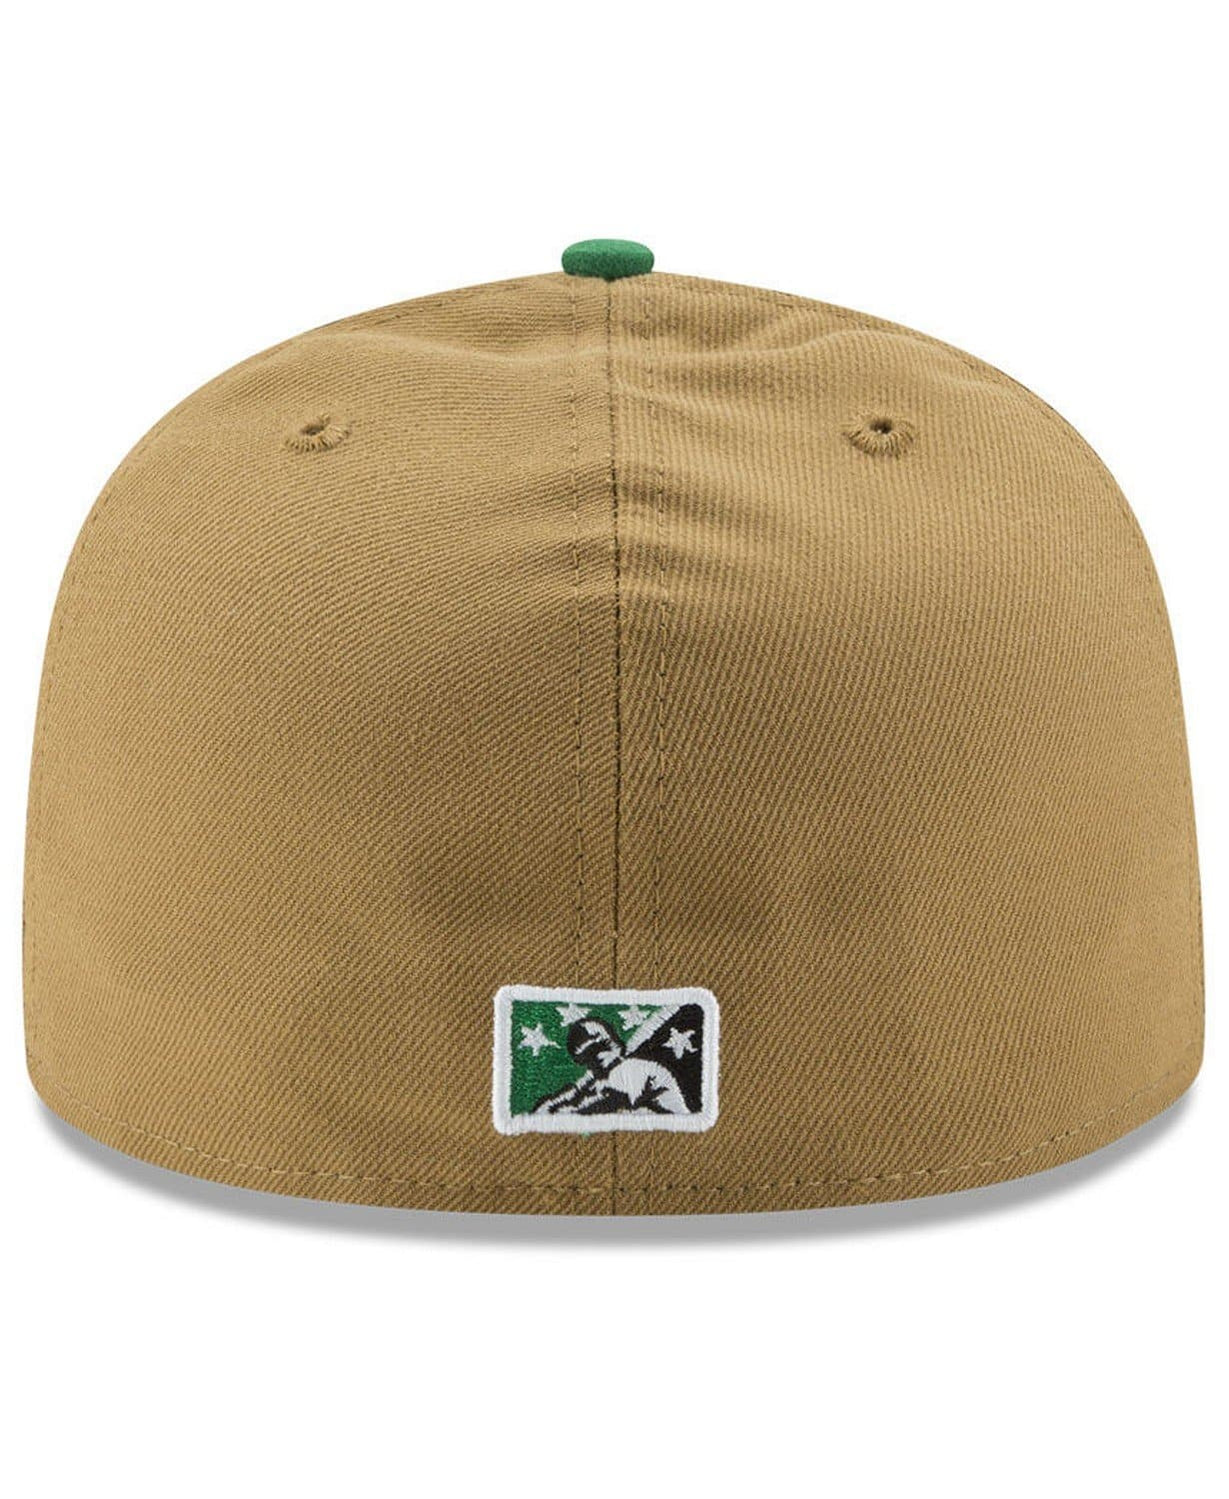 Official MiLB Fitted Hats | MiLB Baseball Caps